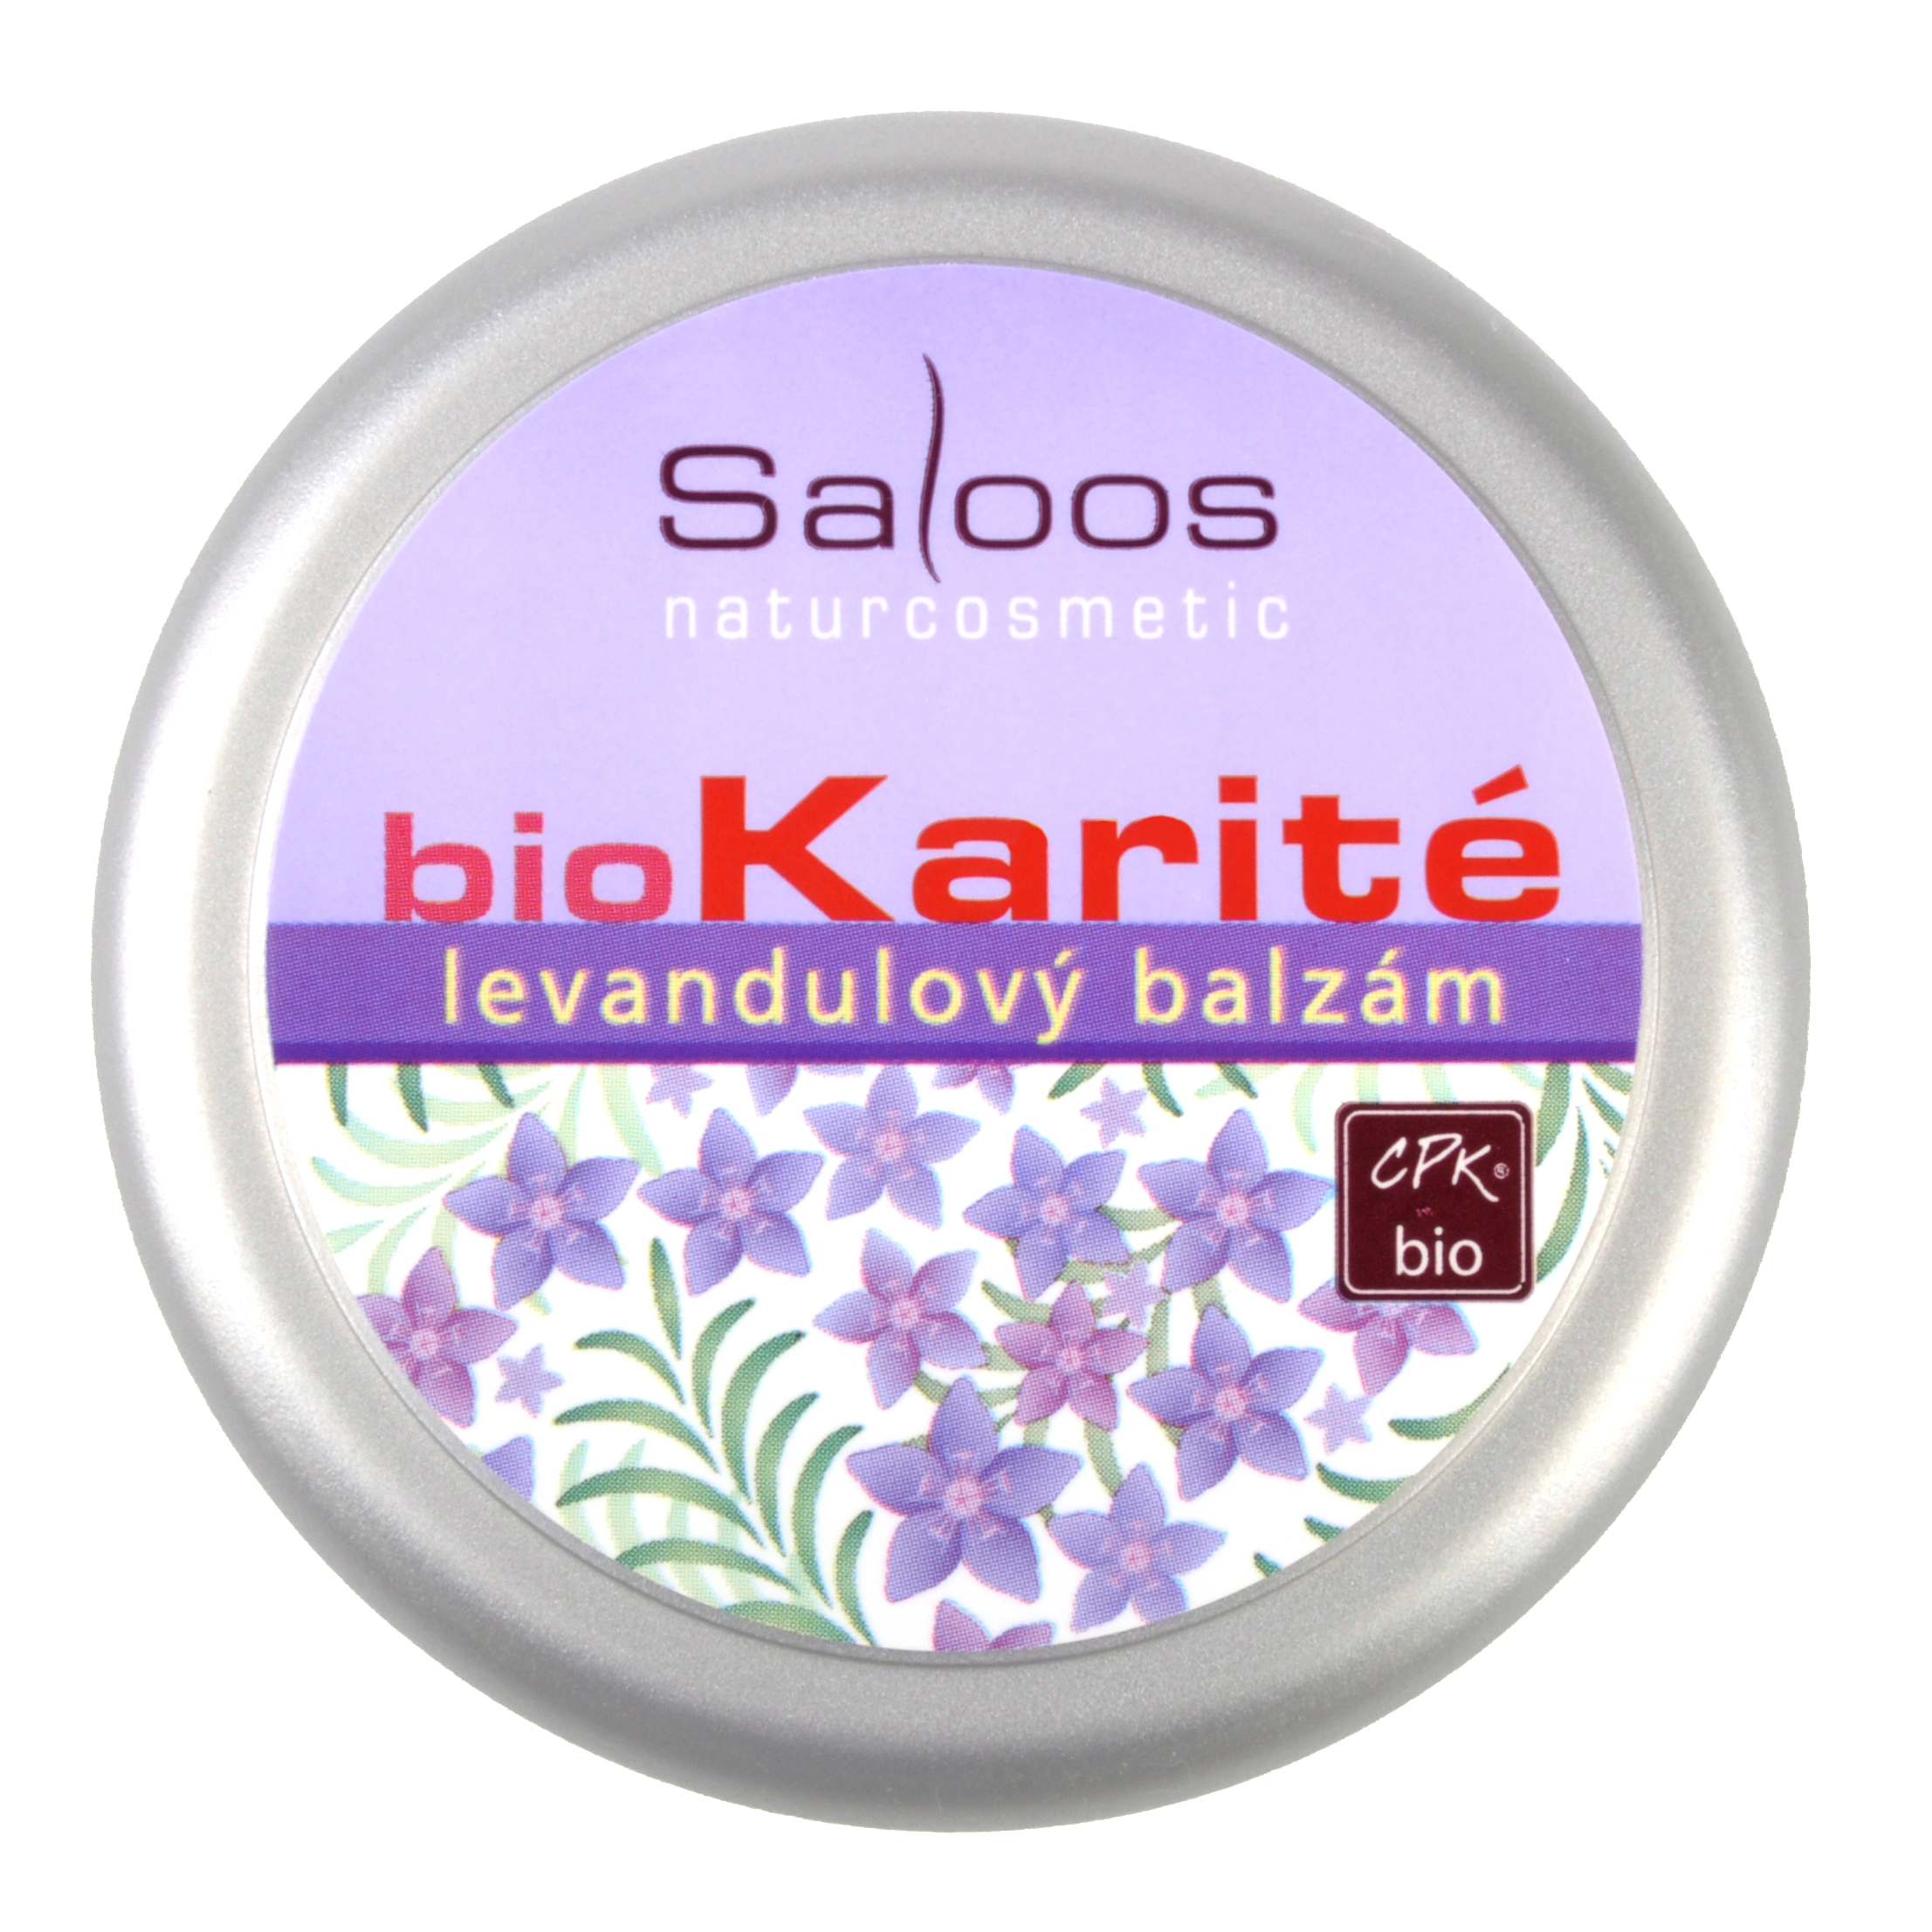 bio-karite-levandulovy-balzam-19ml-saloos